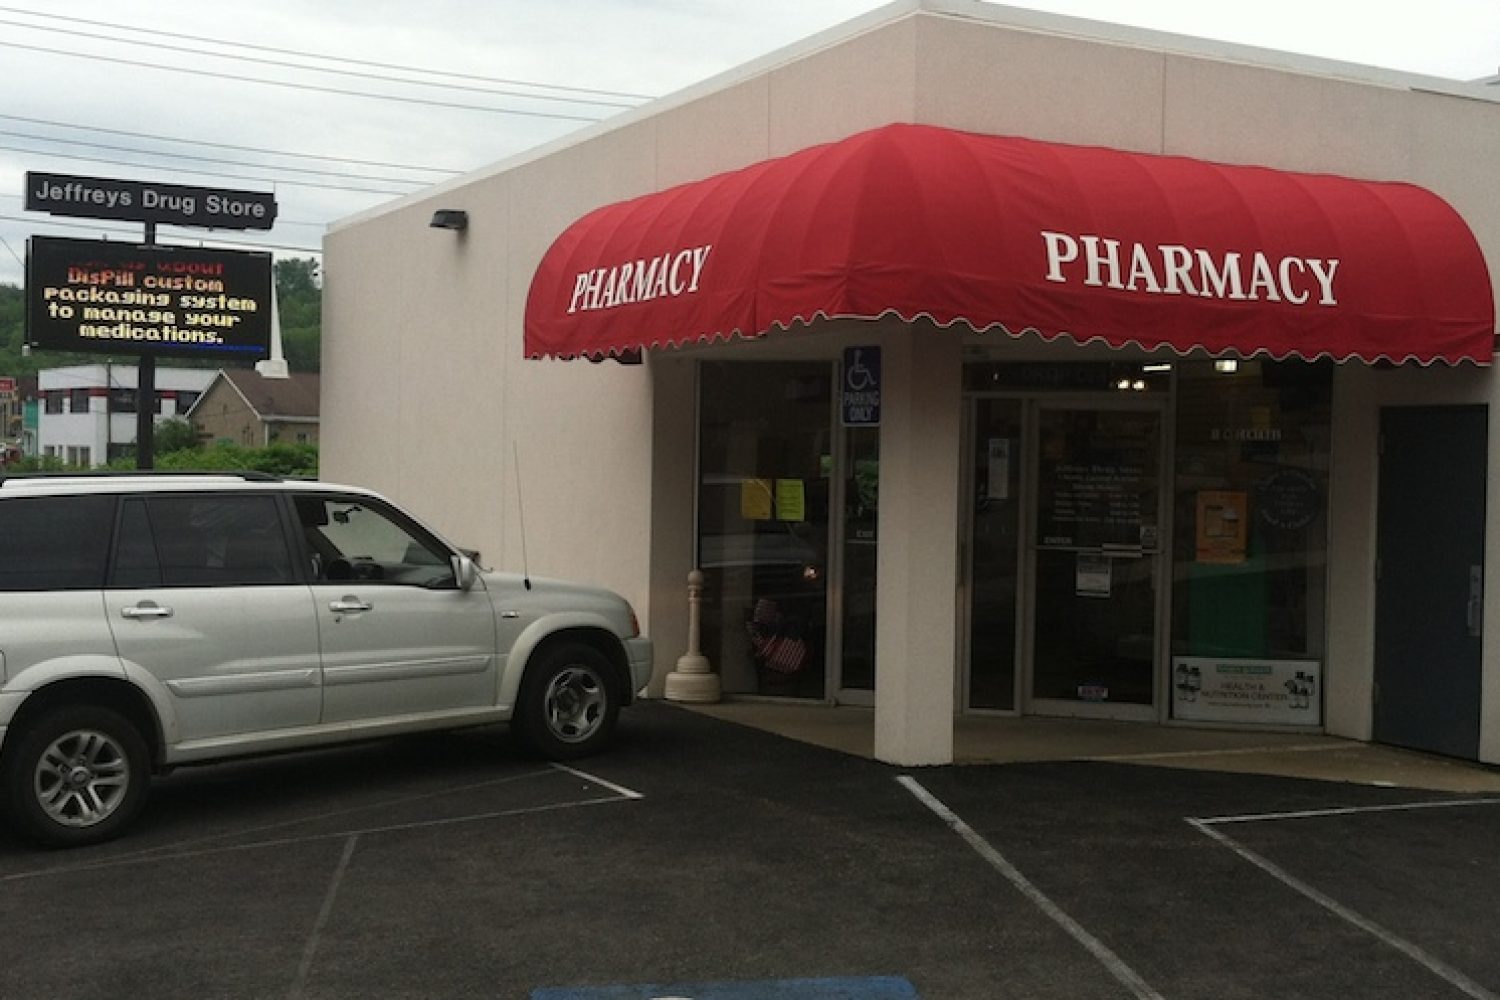 Jeffreys Drugstore Canonsburg, Pa